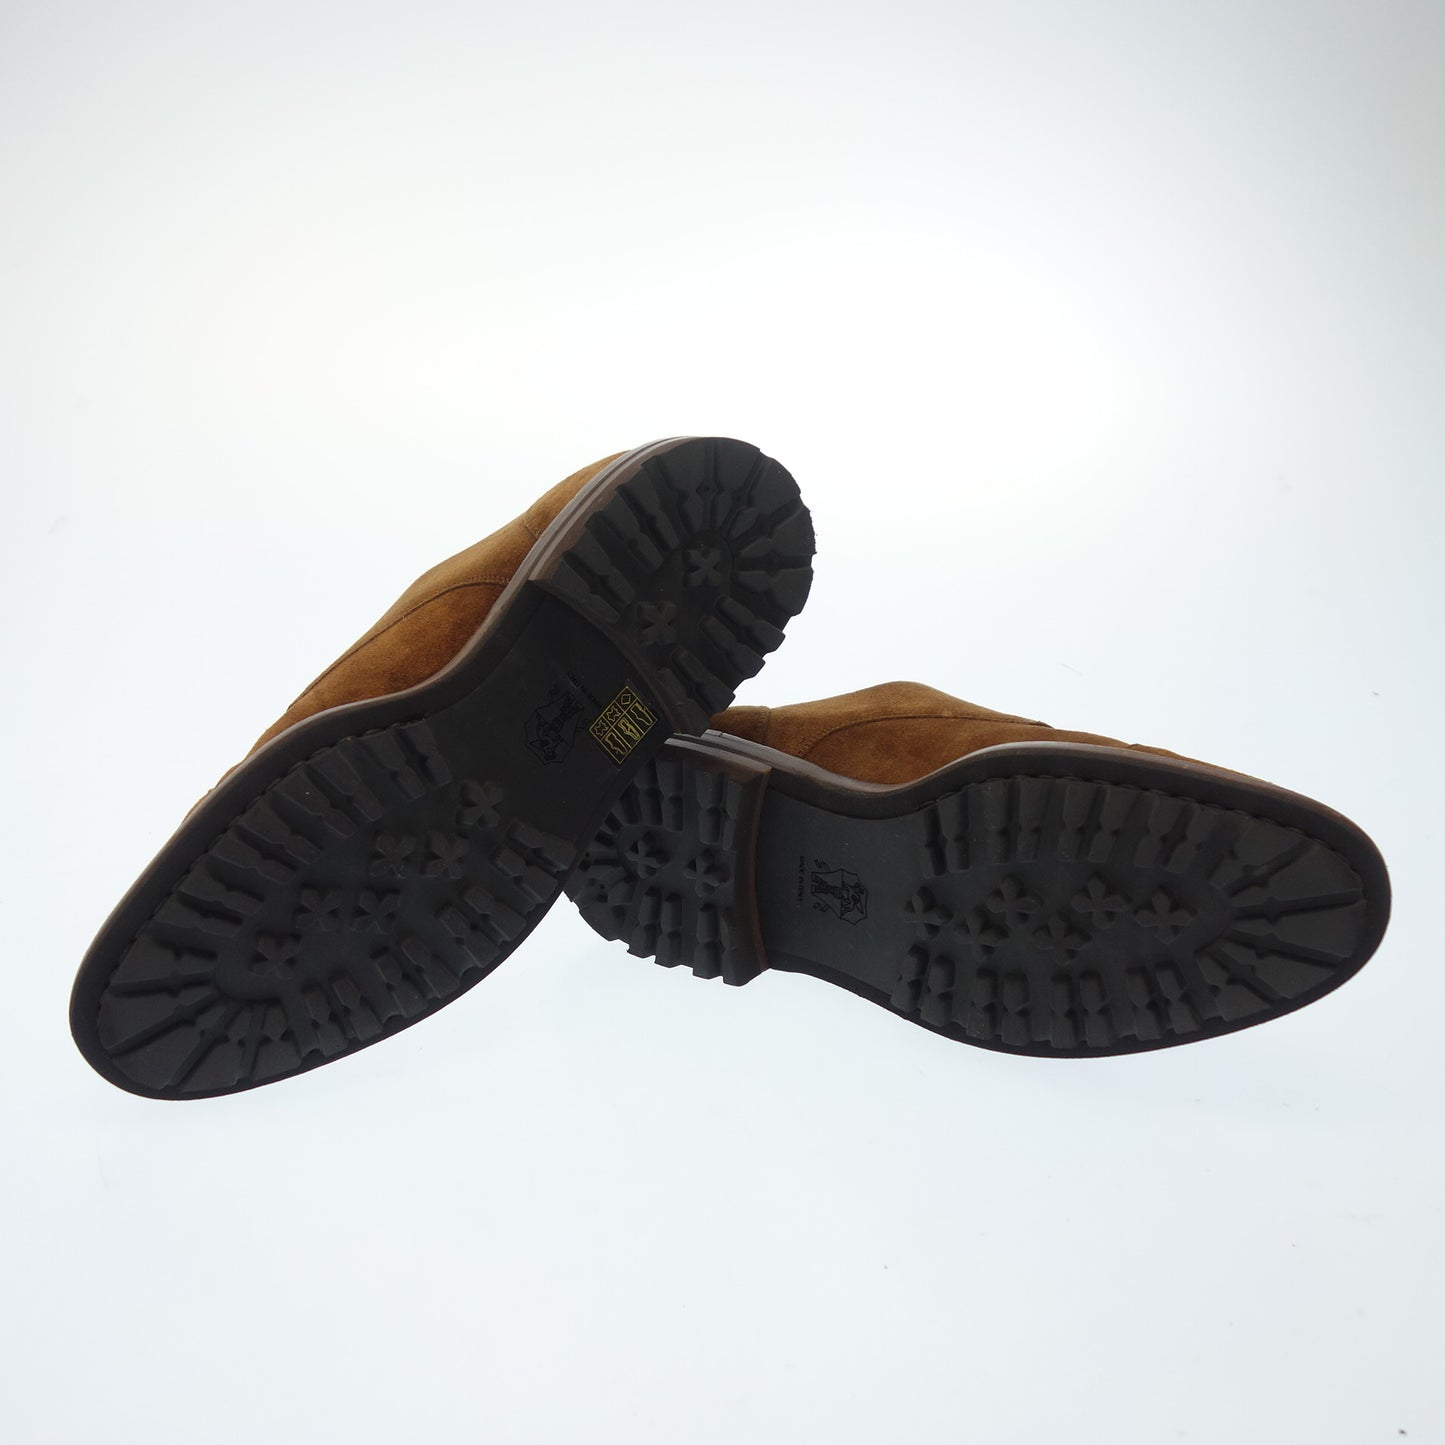 Good Condition◆Brunello Cucinelli Leather Shoes Suede Straight Tip Men's 42 Brown BRUNELLO CUCINELLI [AFC55] 